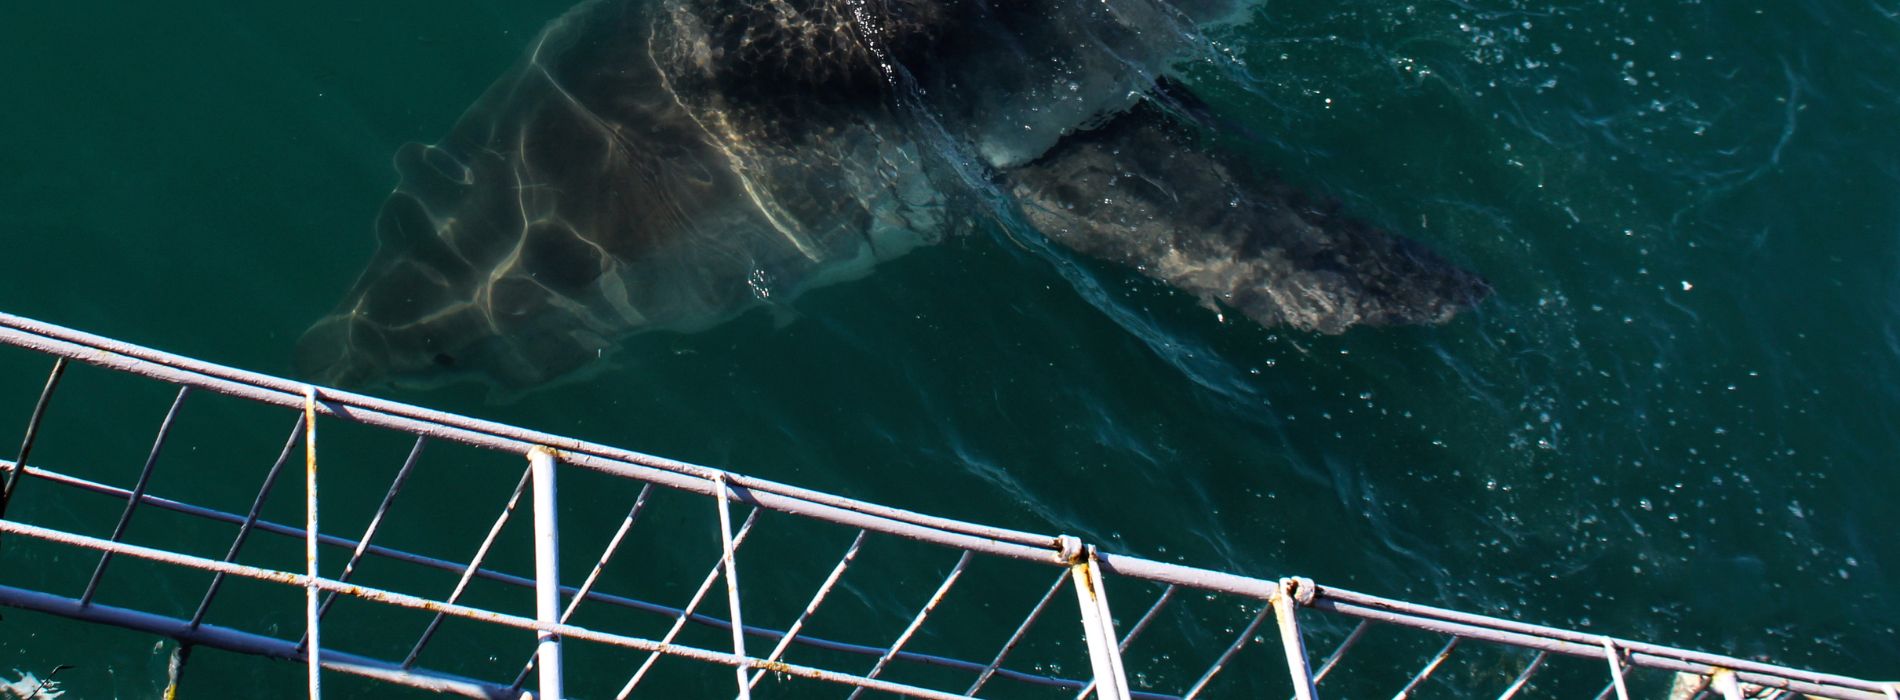 Shark cage diving gansbaai - Madeinsea©